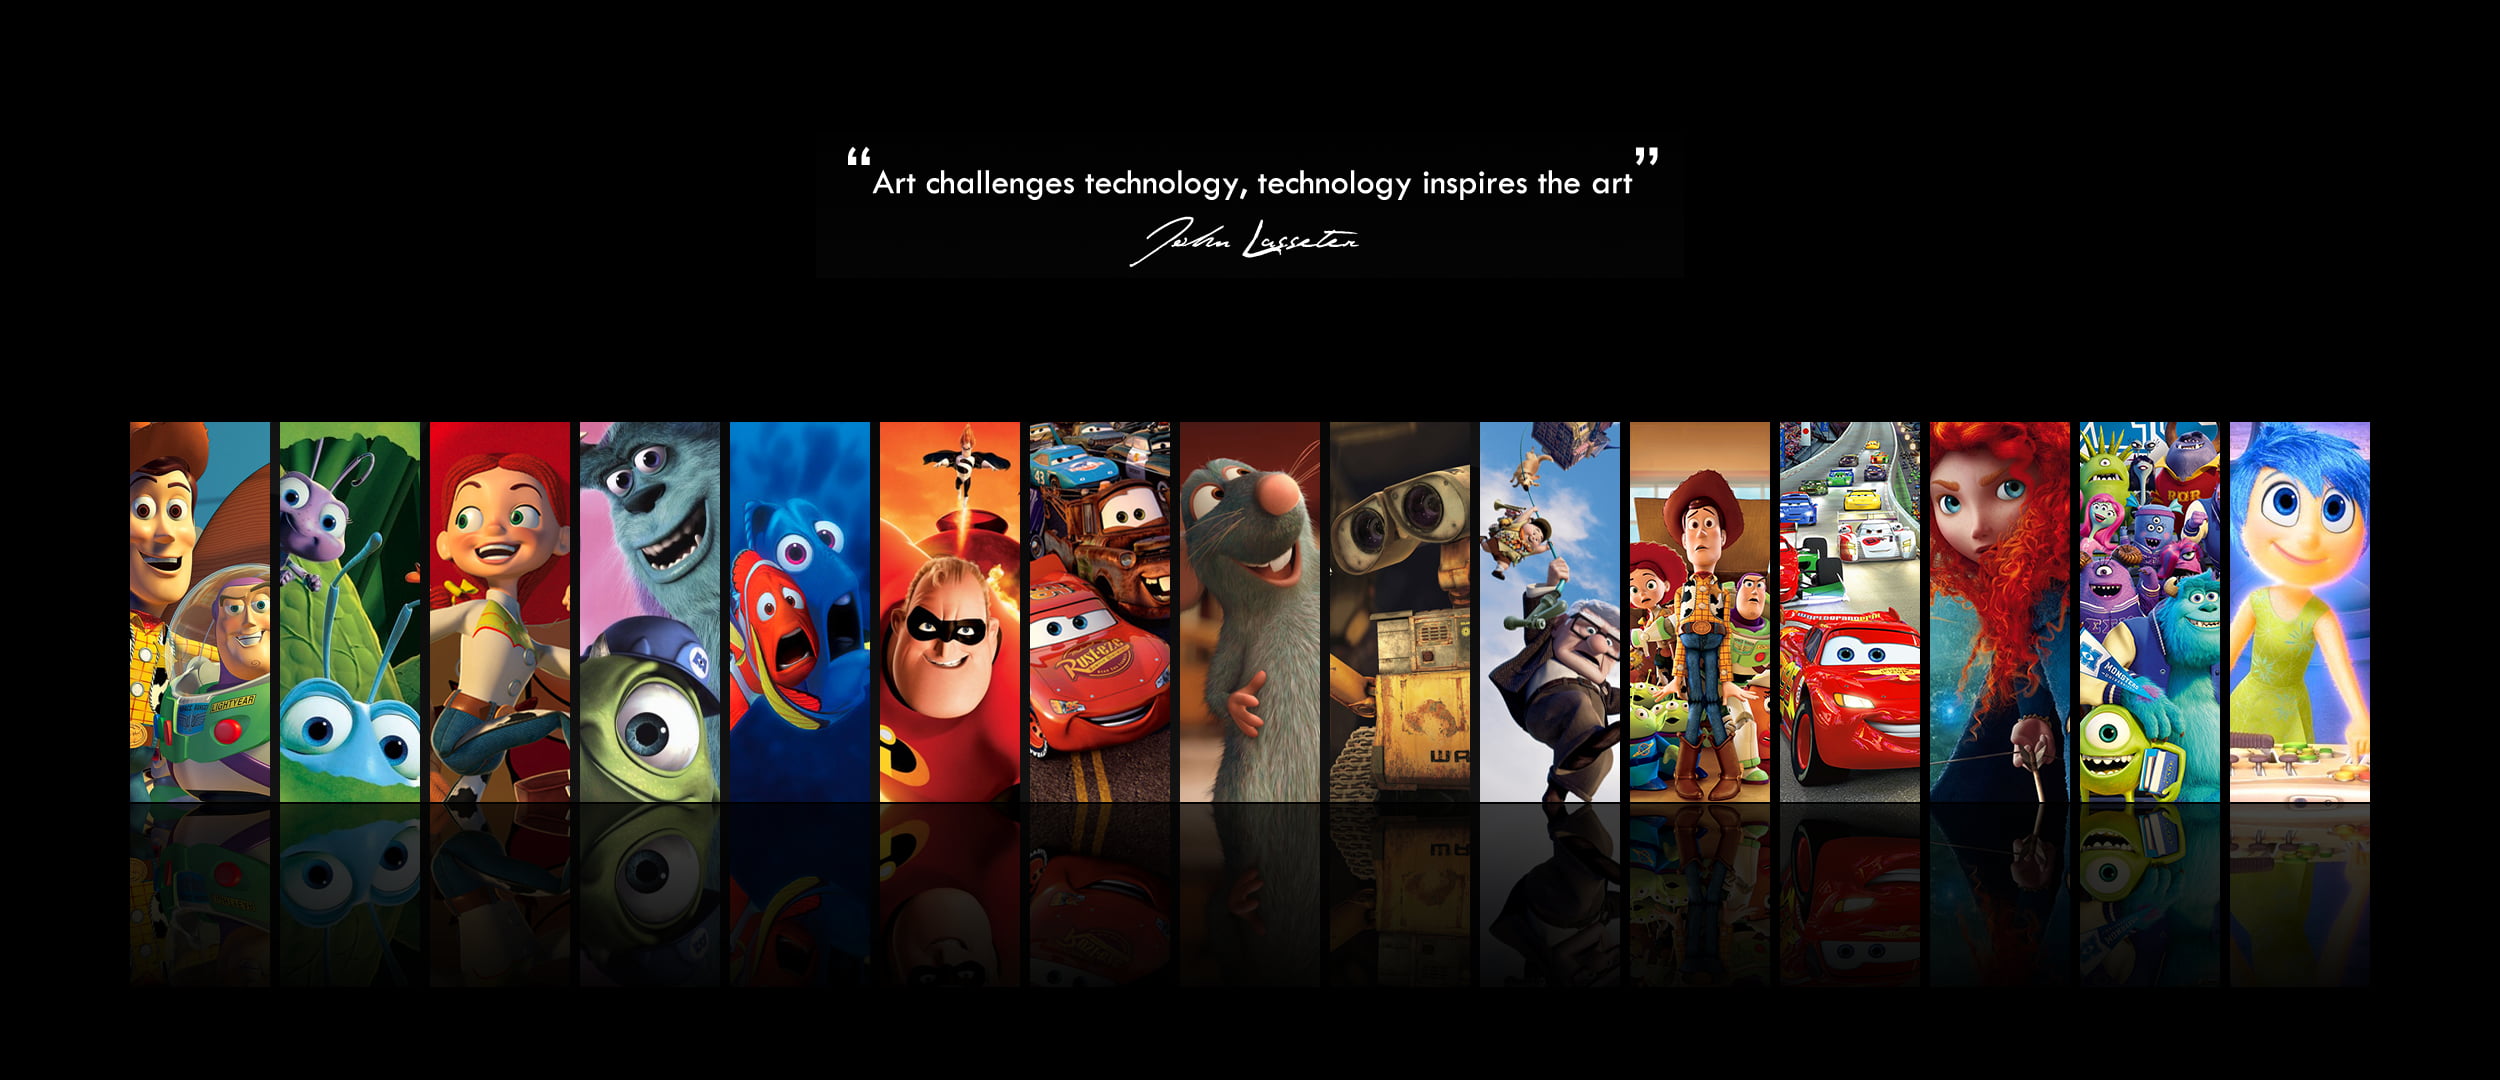 assorted Disney characters digital wallpaper, Pixar Animation Studios, Toy Story, Monsters, Inc., Finding Nemo